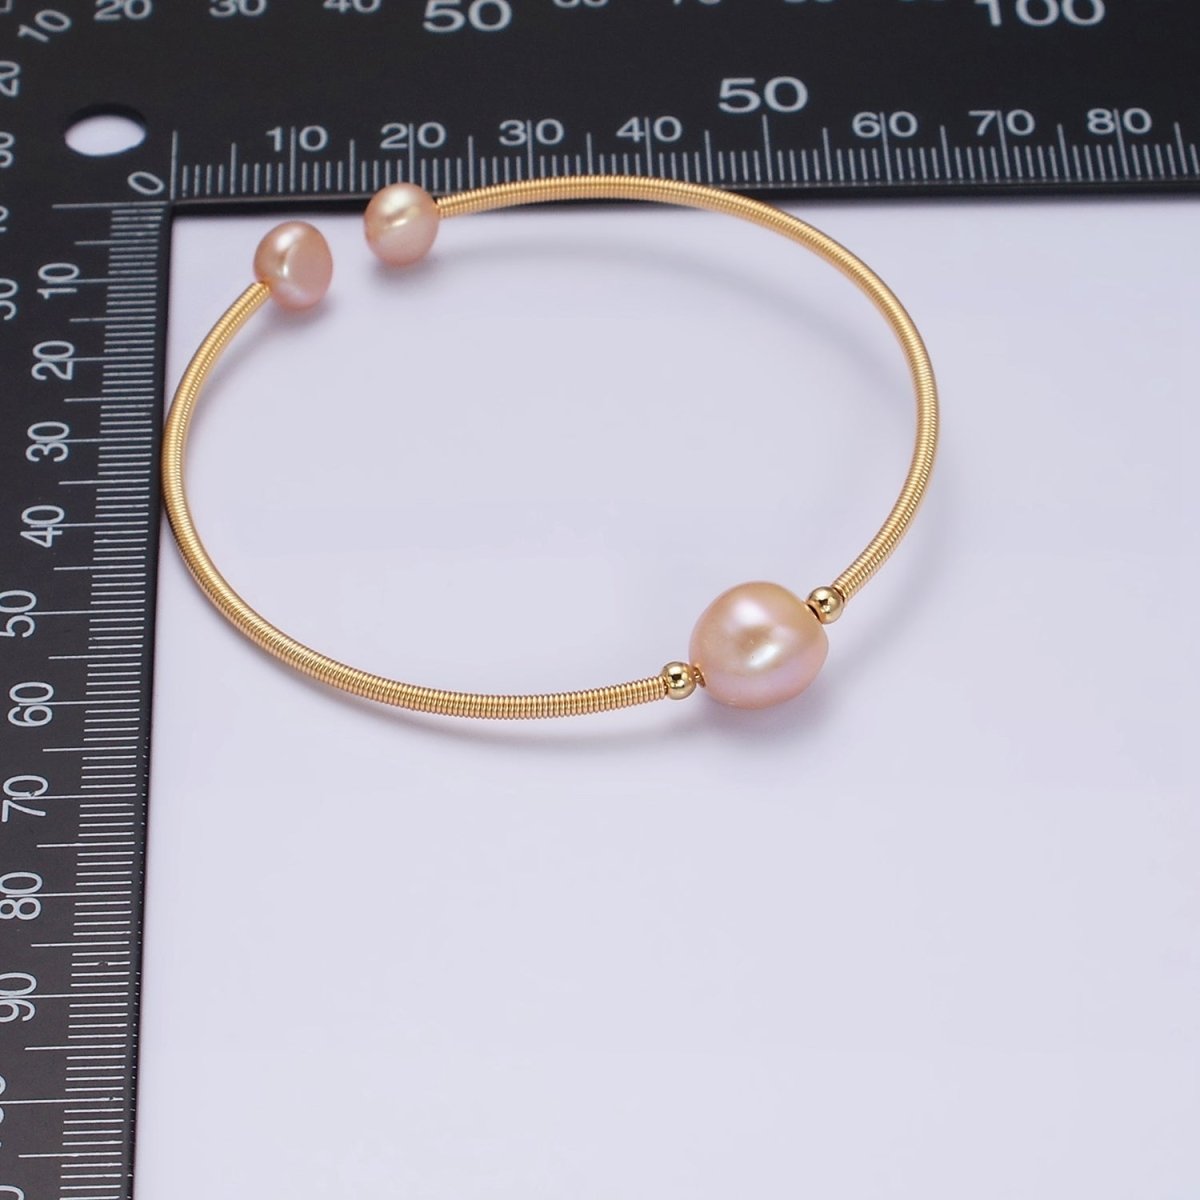 Floating Pearl Cuff Bracelet - White Pink Pearl Bangle - Gold Pearl Bracelet Minimalist jewelry | WA-1862 WA-1863 Clearance Pricing - DLUXCA